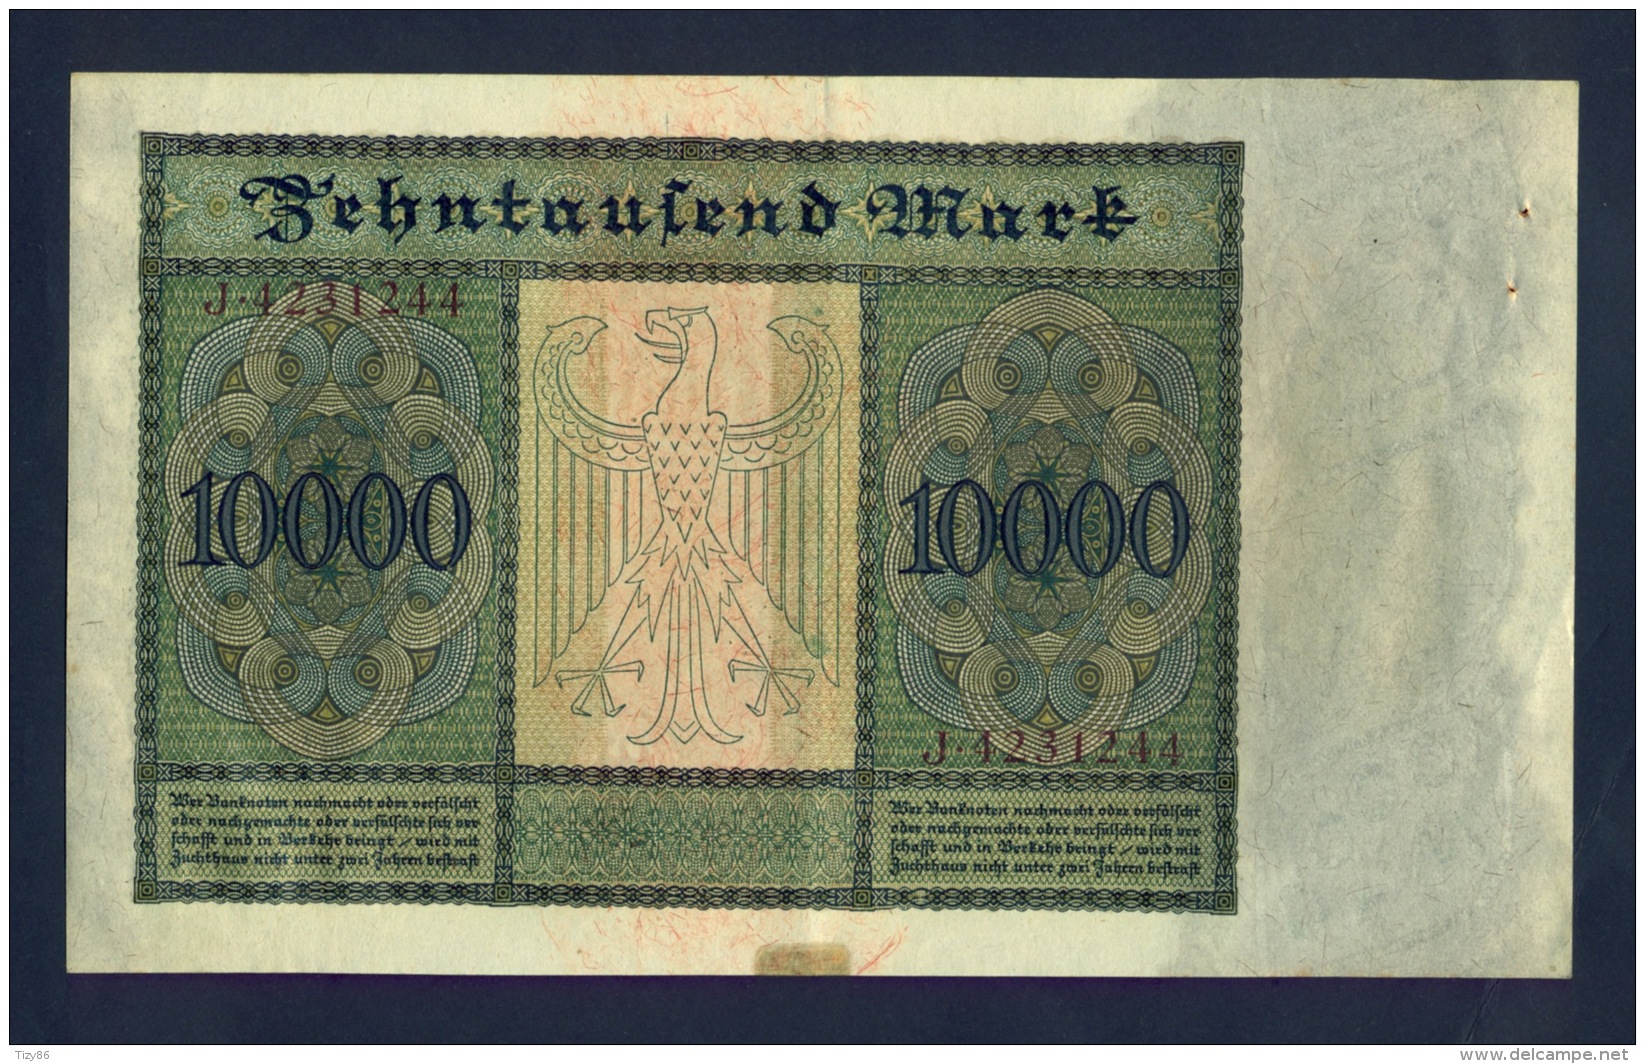 Banconota Germania 10.000 Mark 19/1/1922 - To Identify